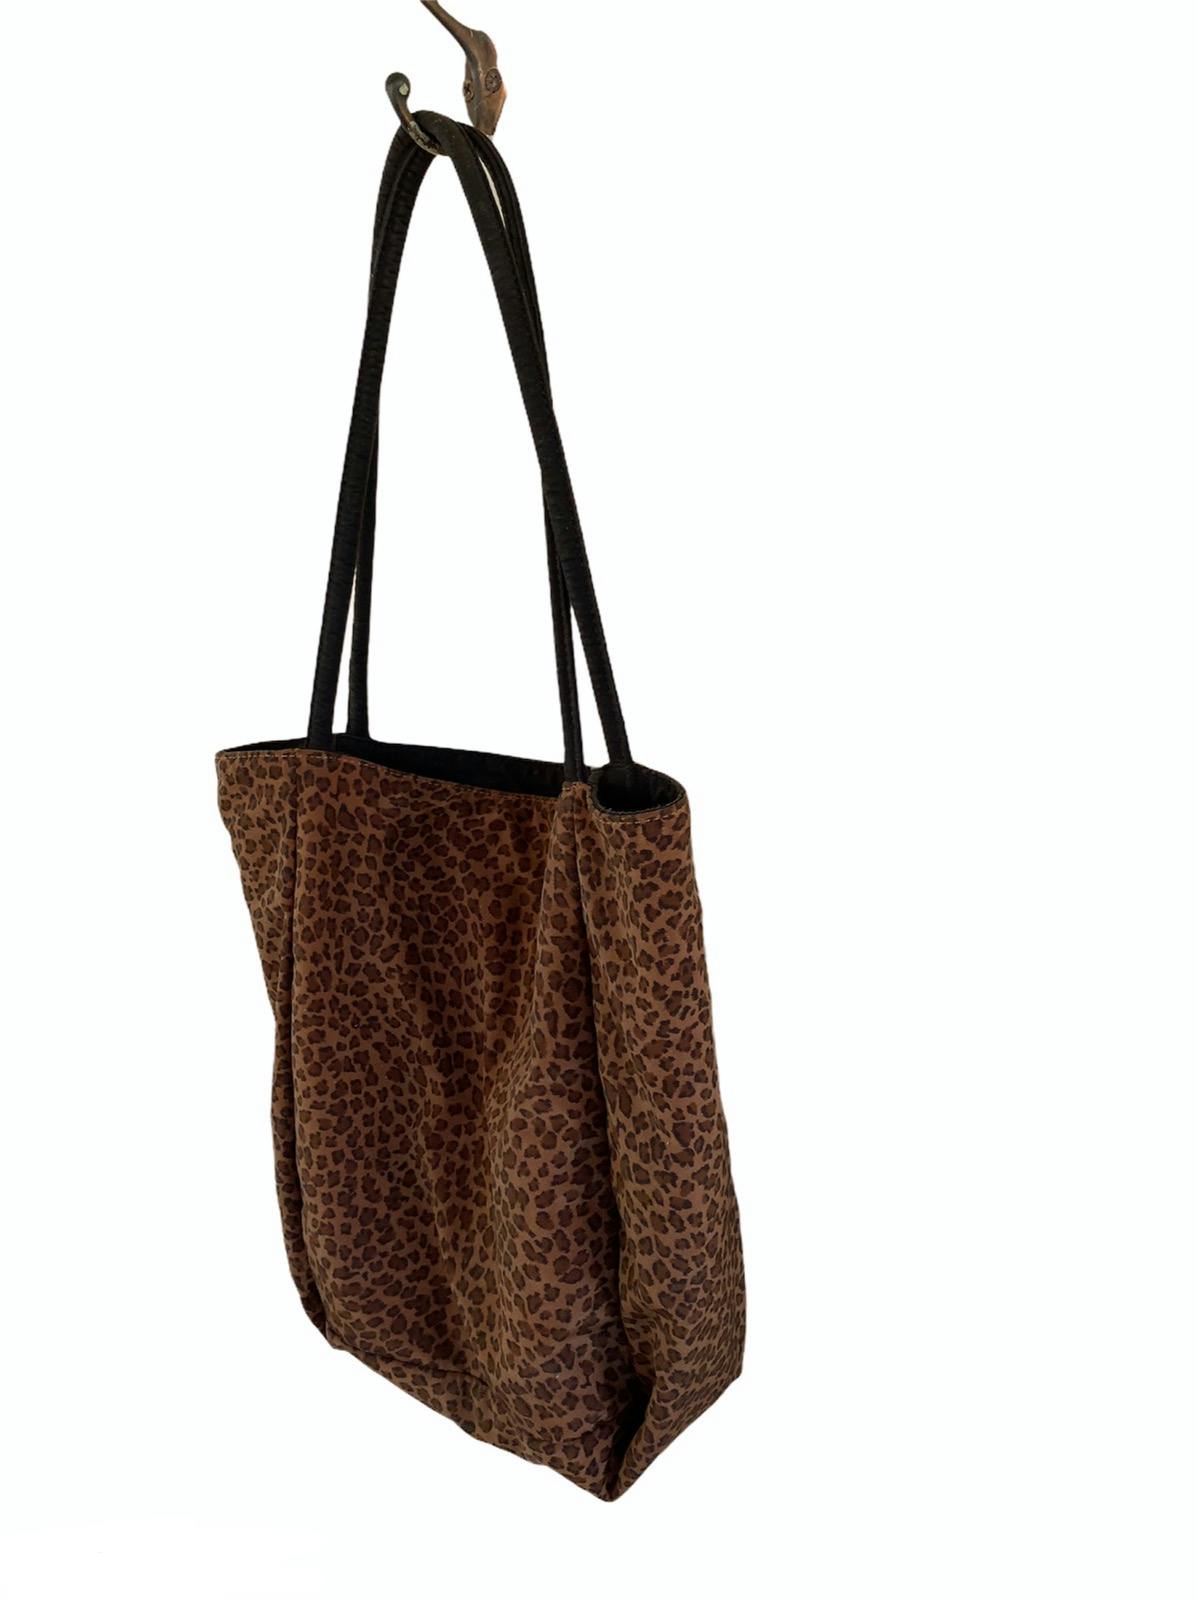 Bottega Veneta Leopard Tote Bag - 3